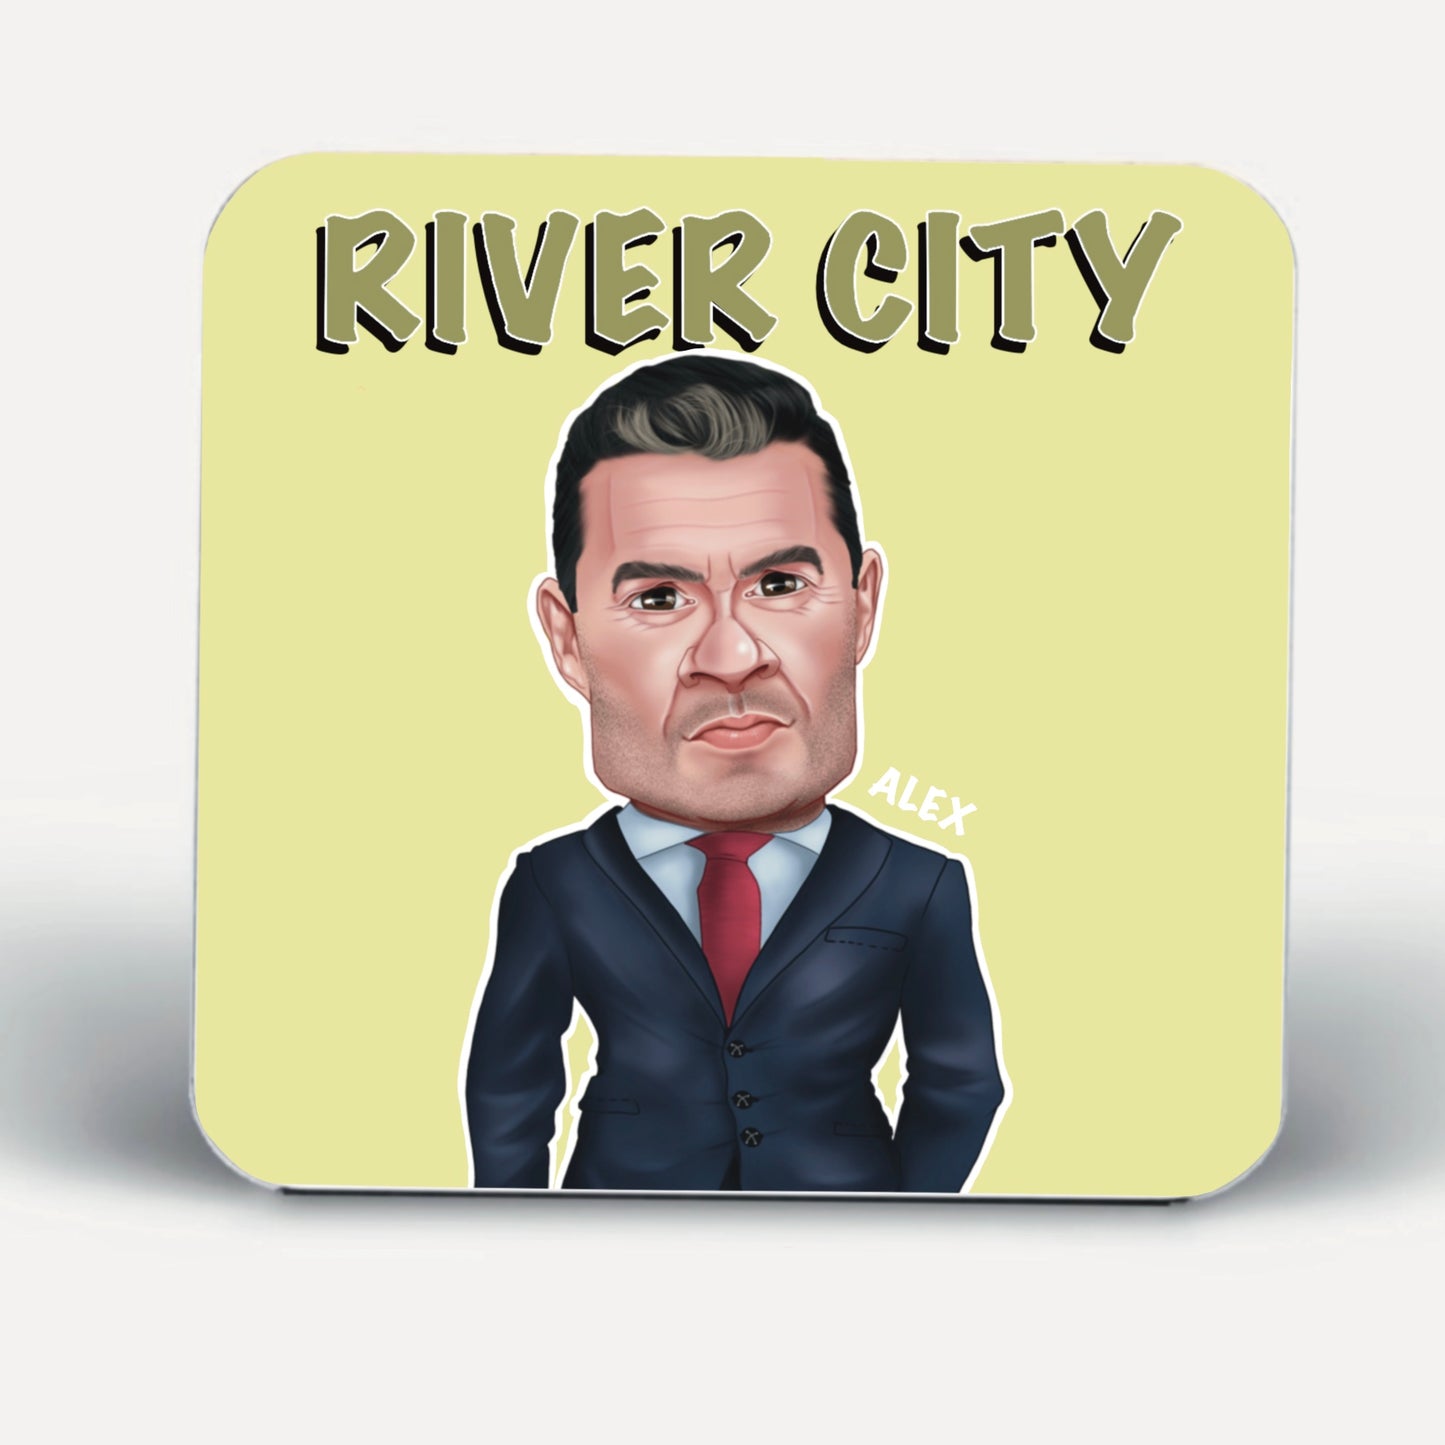 River city Alex Coasters-Coasters